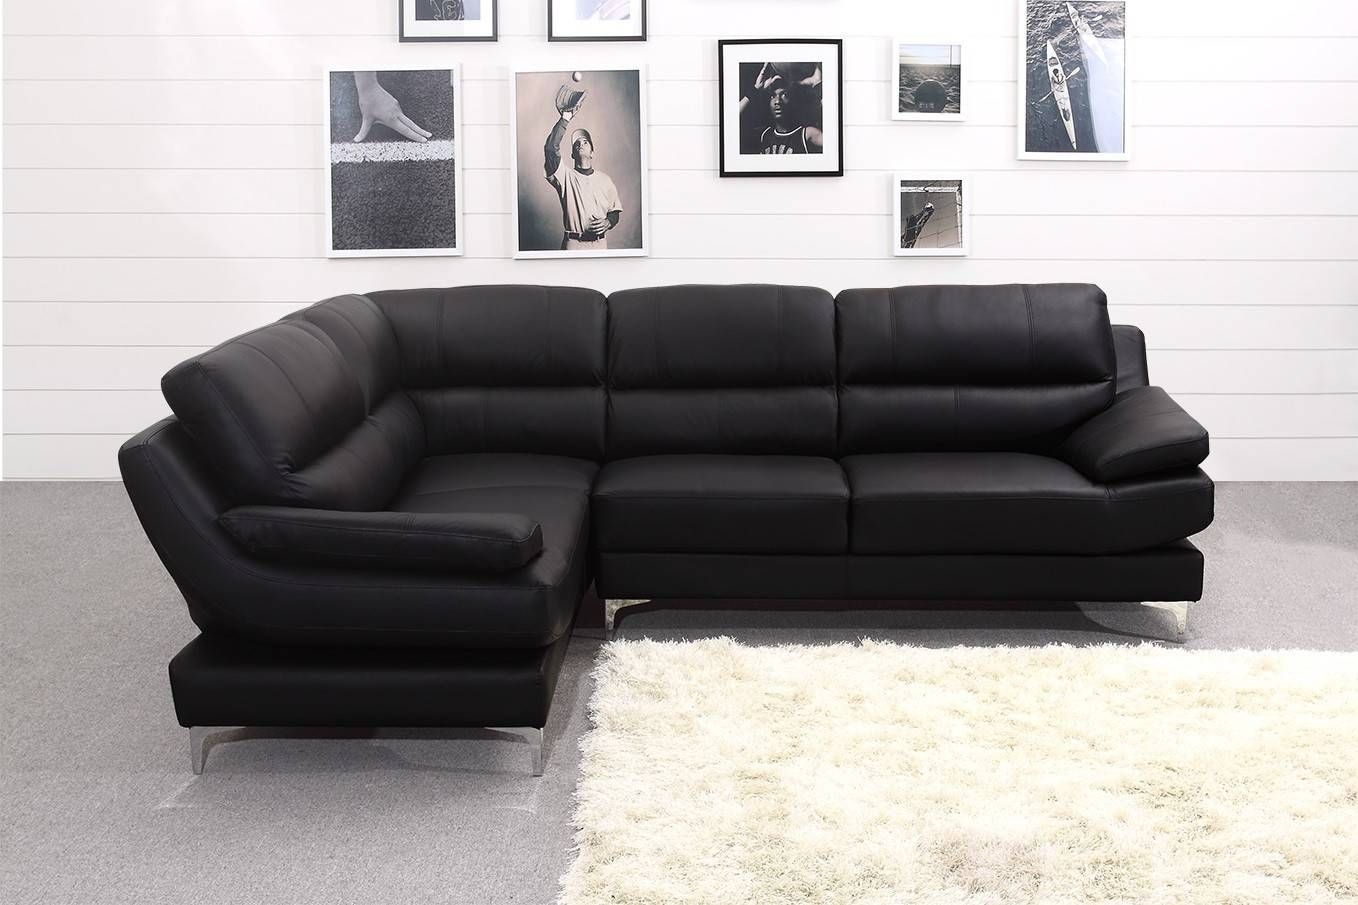 black leather corner sofa bed with storage